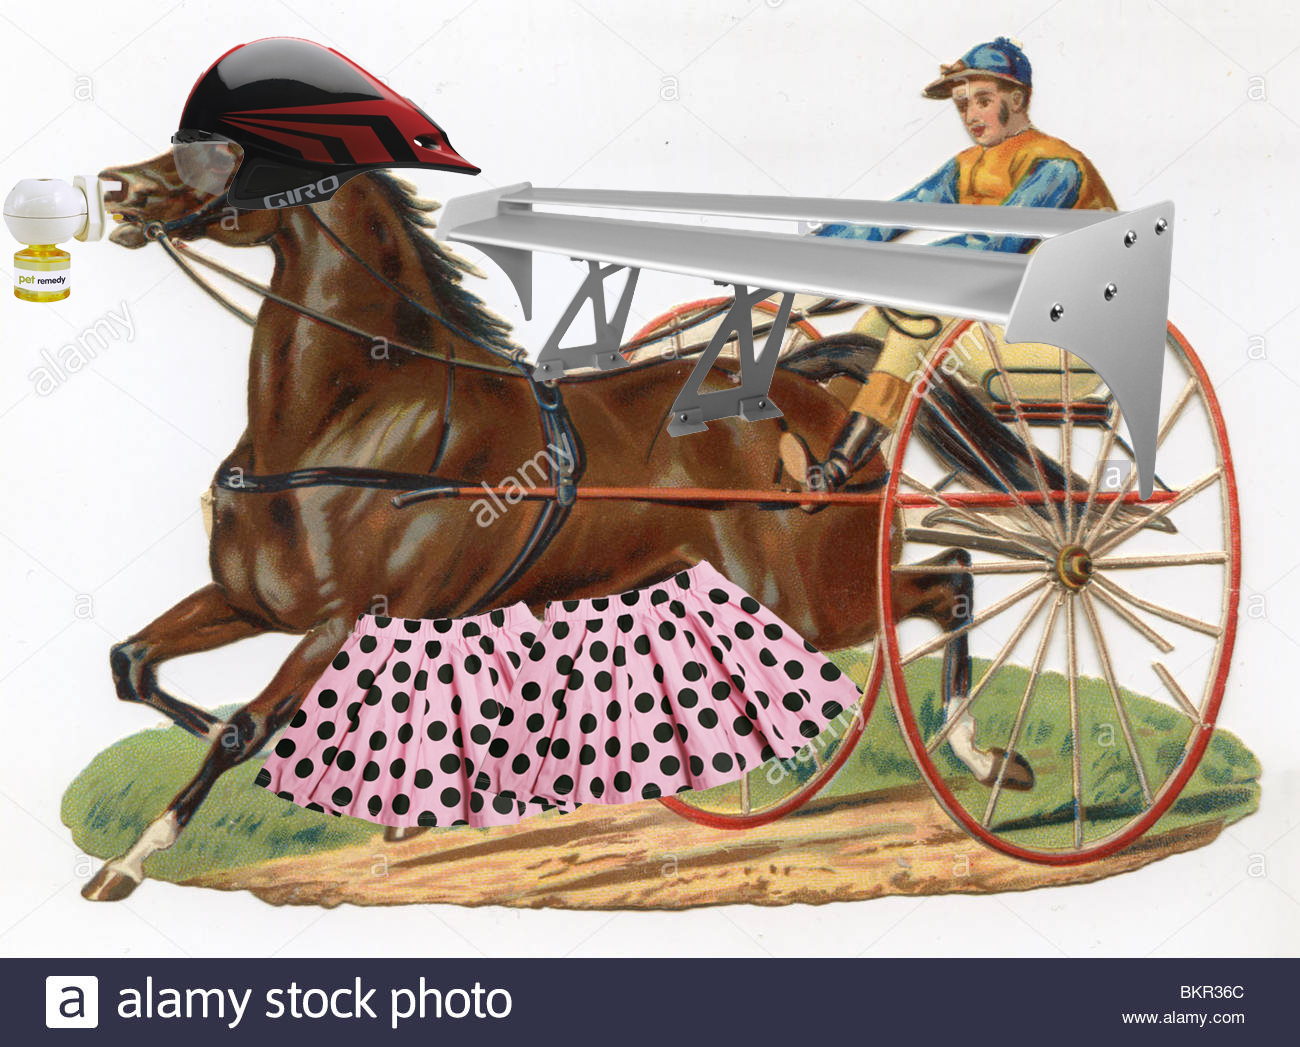 jockey-racing-a-horse-drawn-carriage-victorian-era-BKR36C.jpg